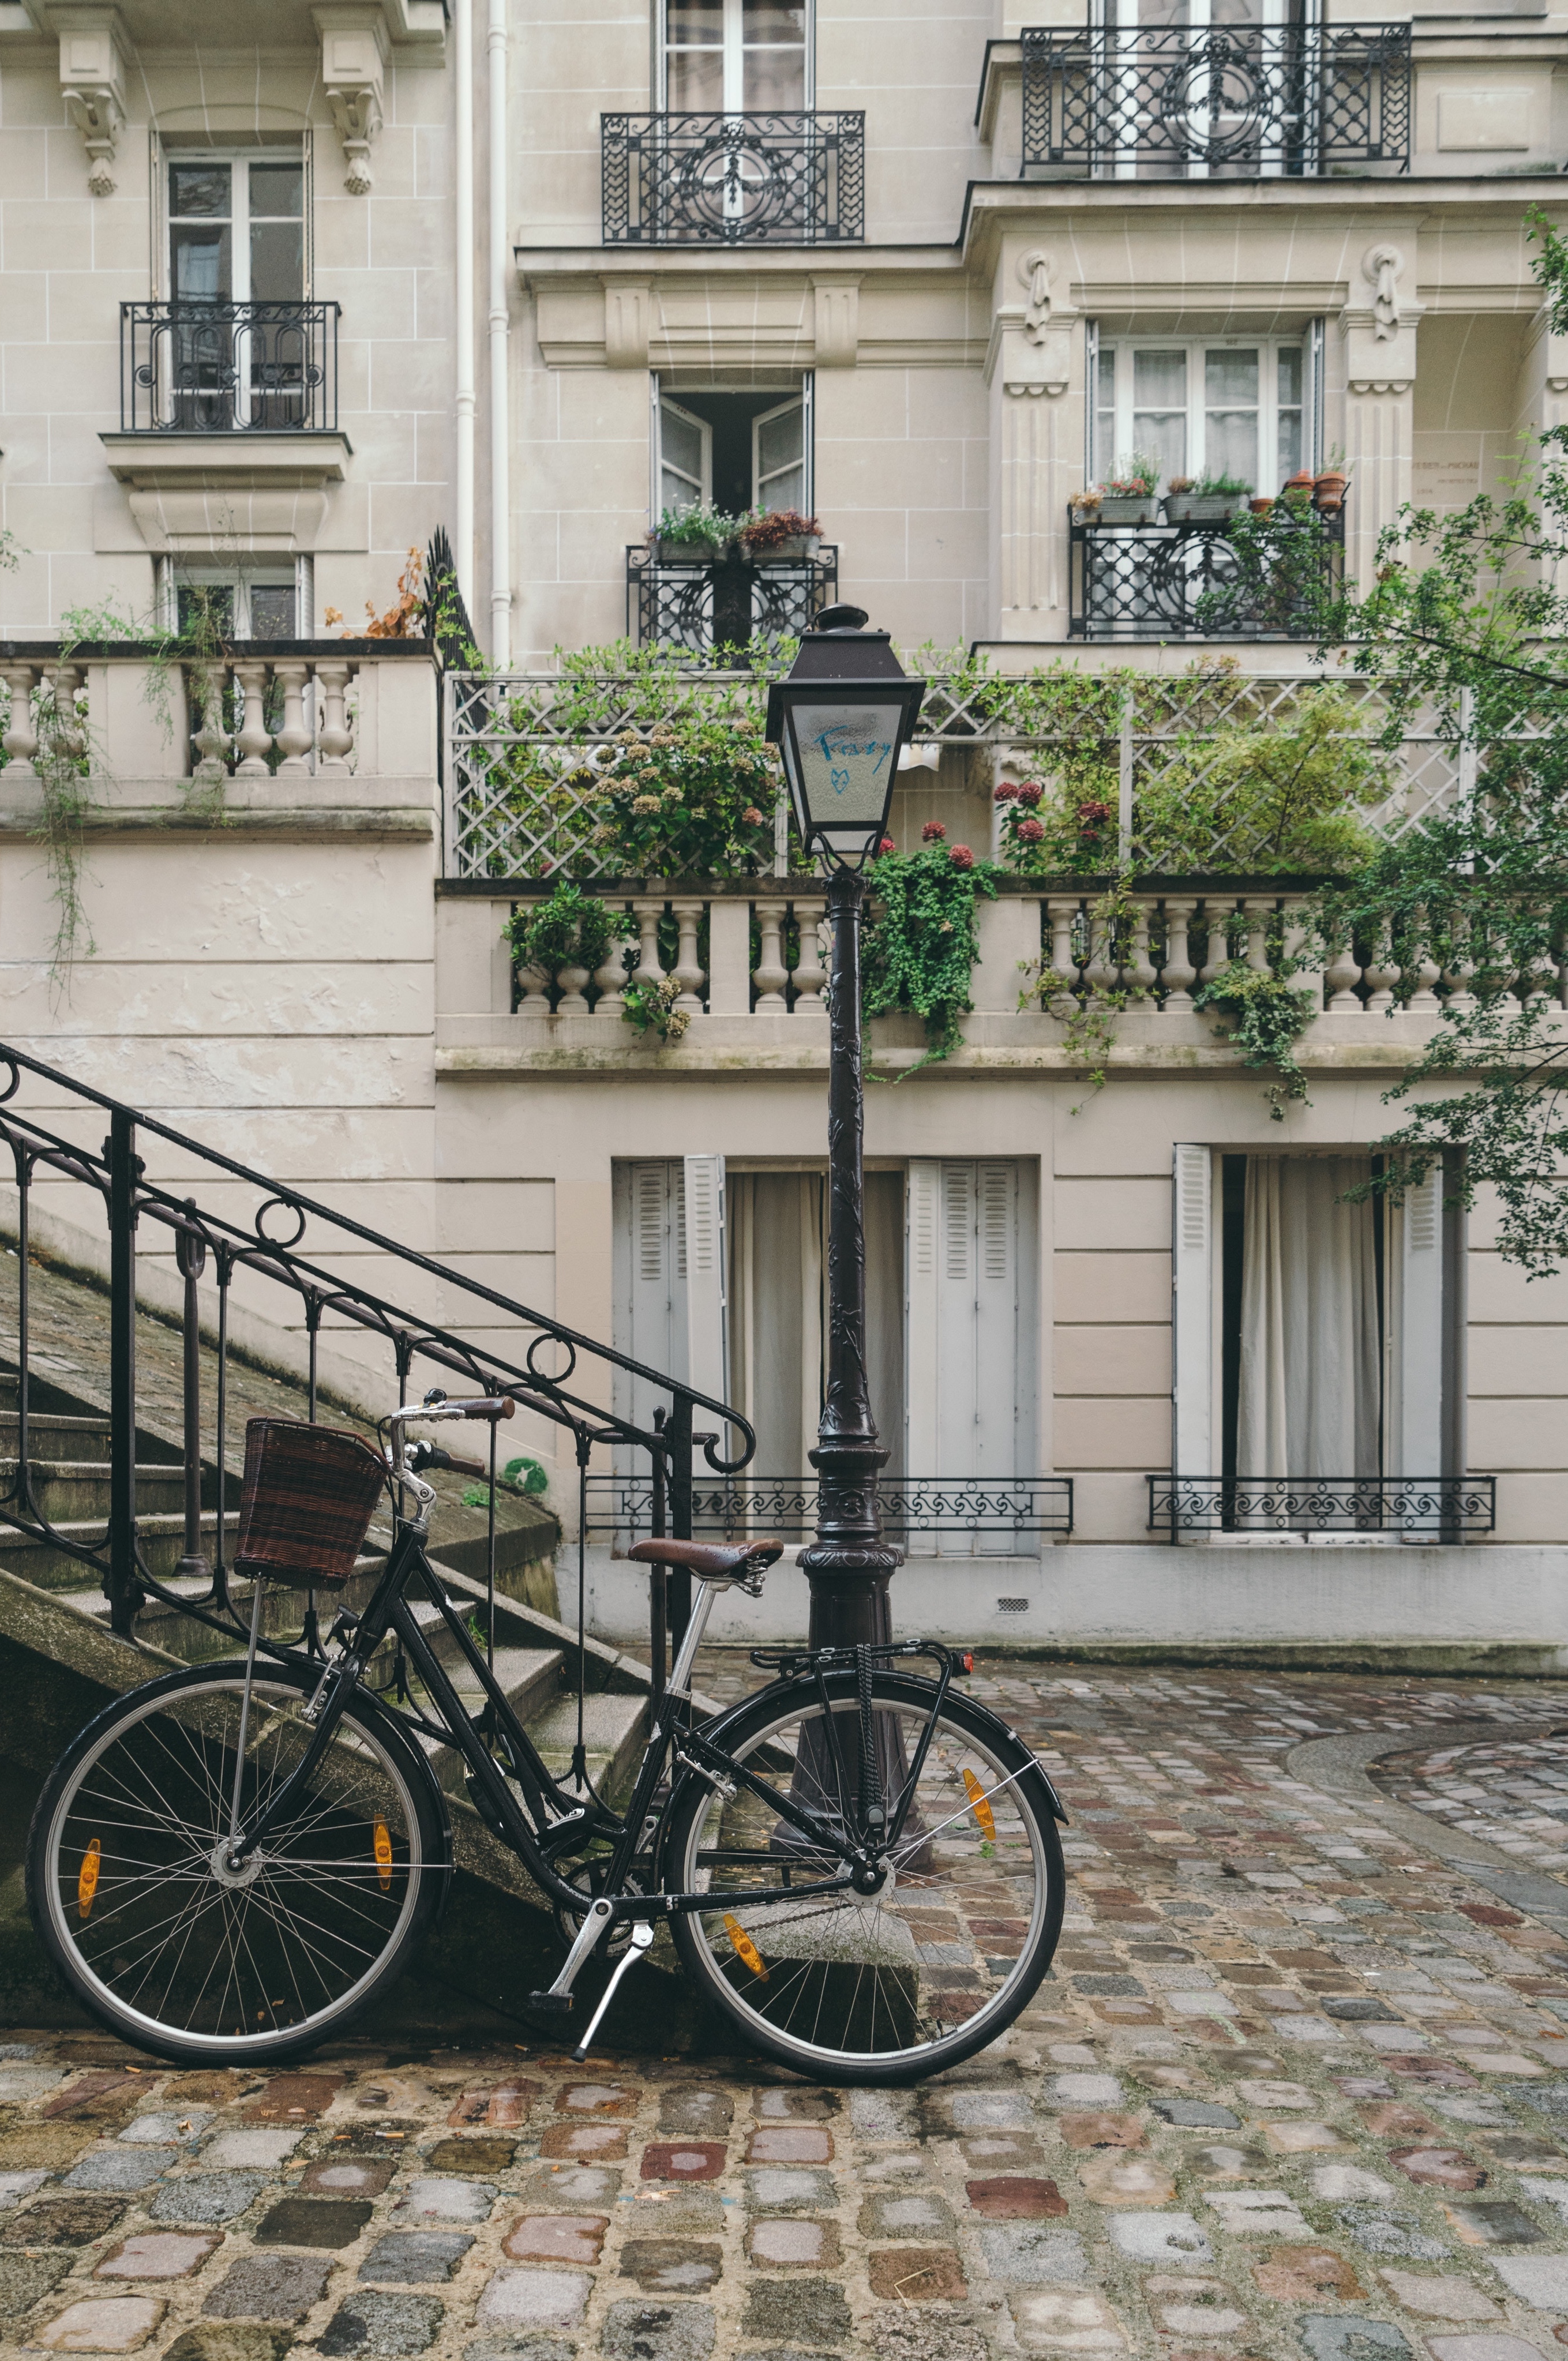 android street, facade, miscellanea, city, miscellaneous, bicycle